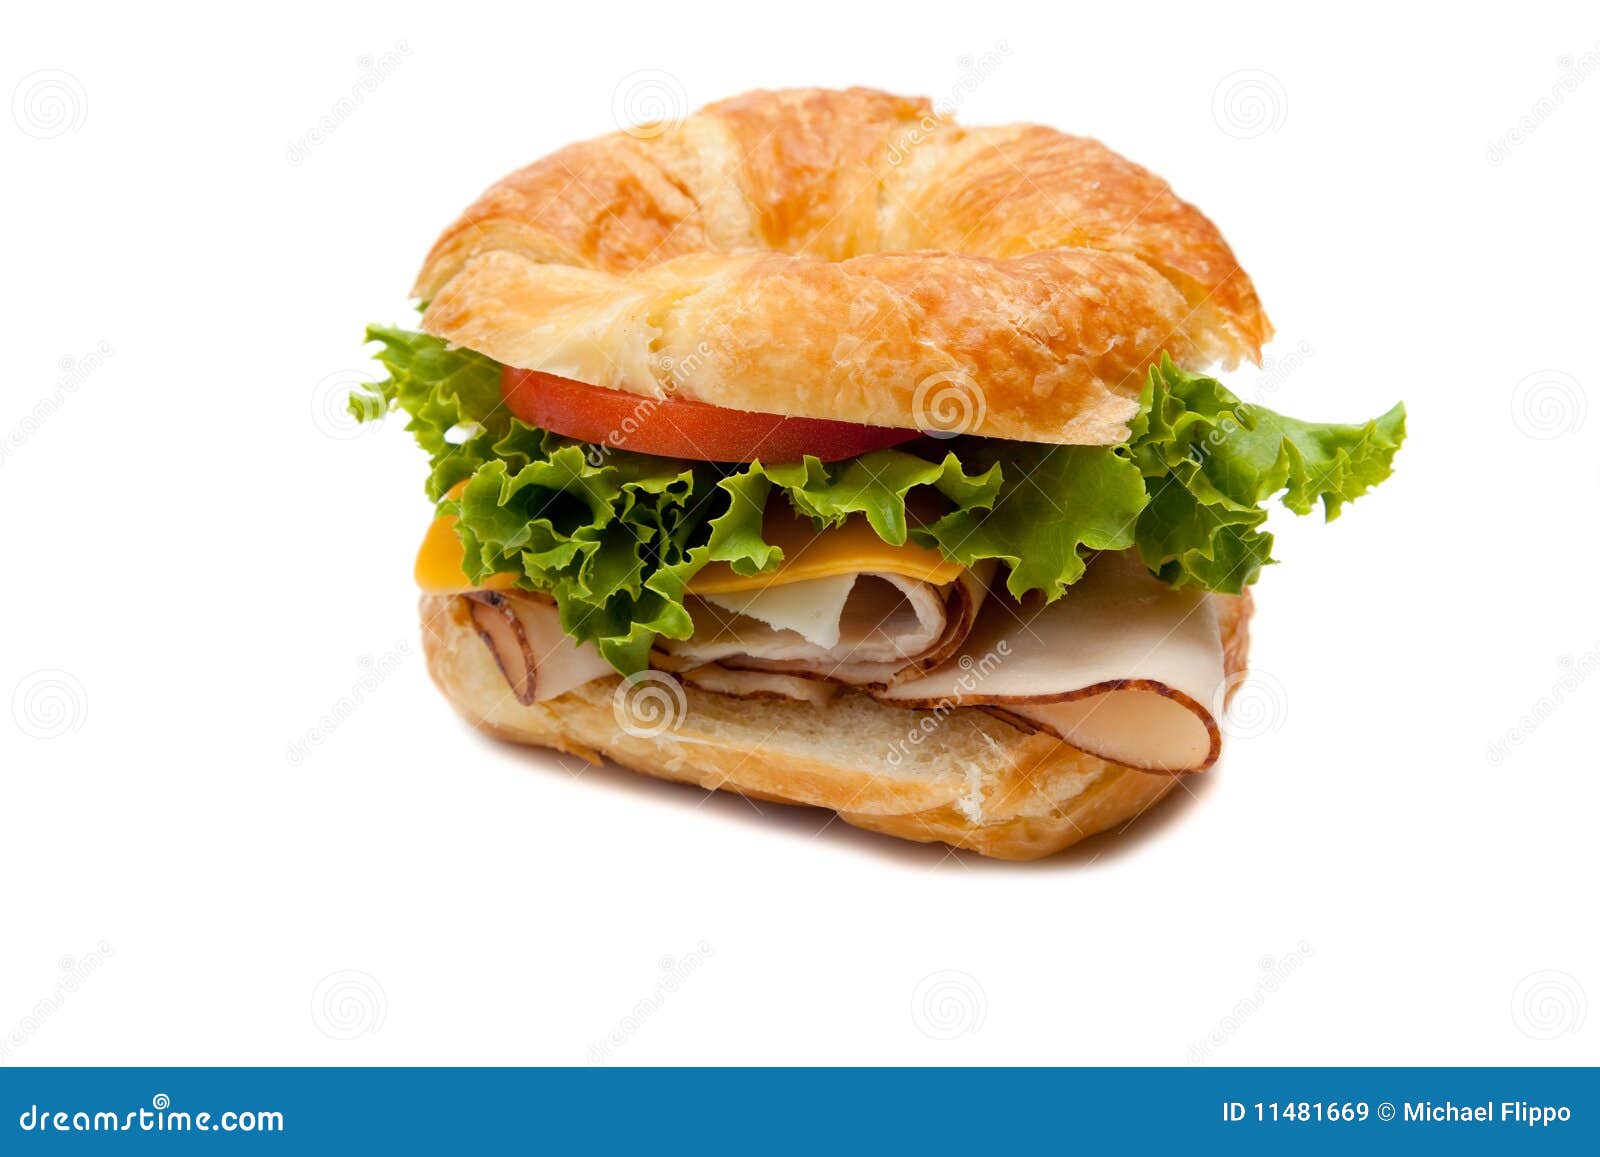 a turkey sandwich on a croissant